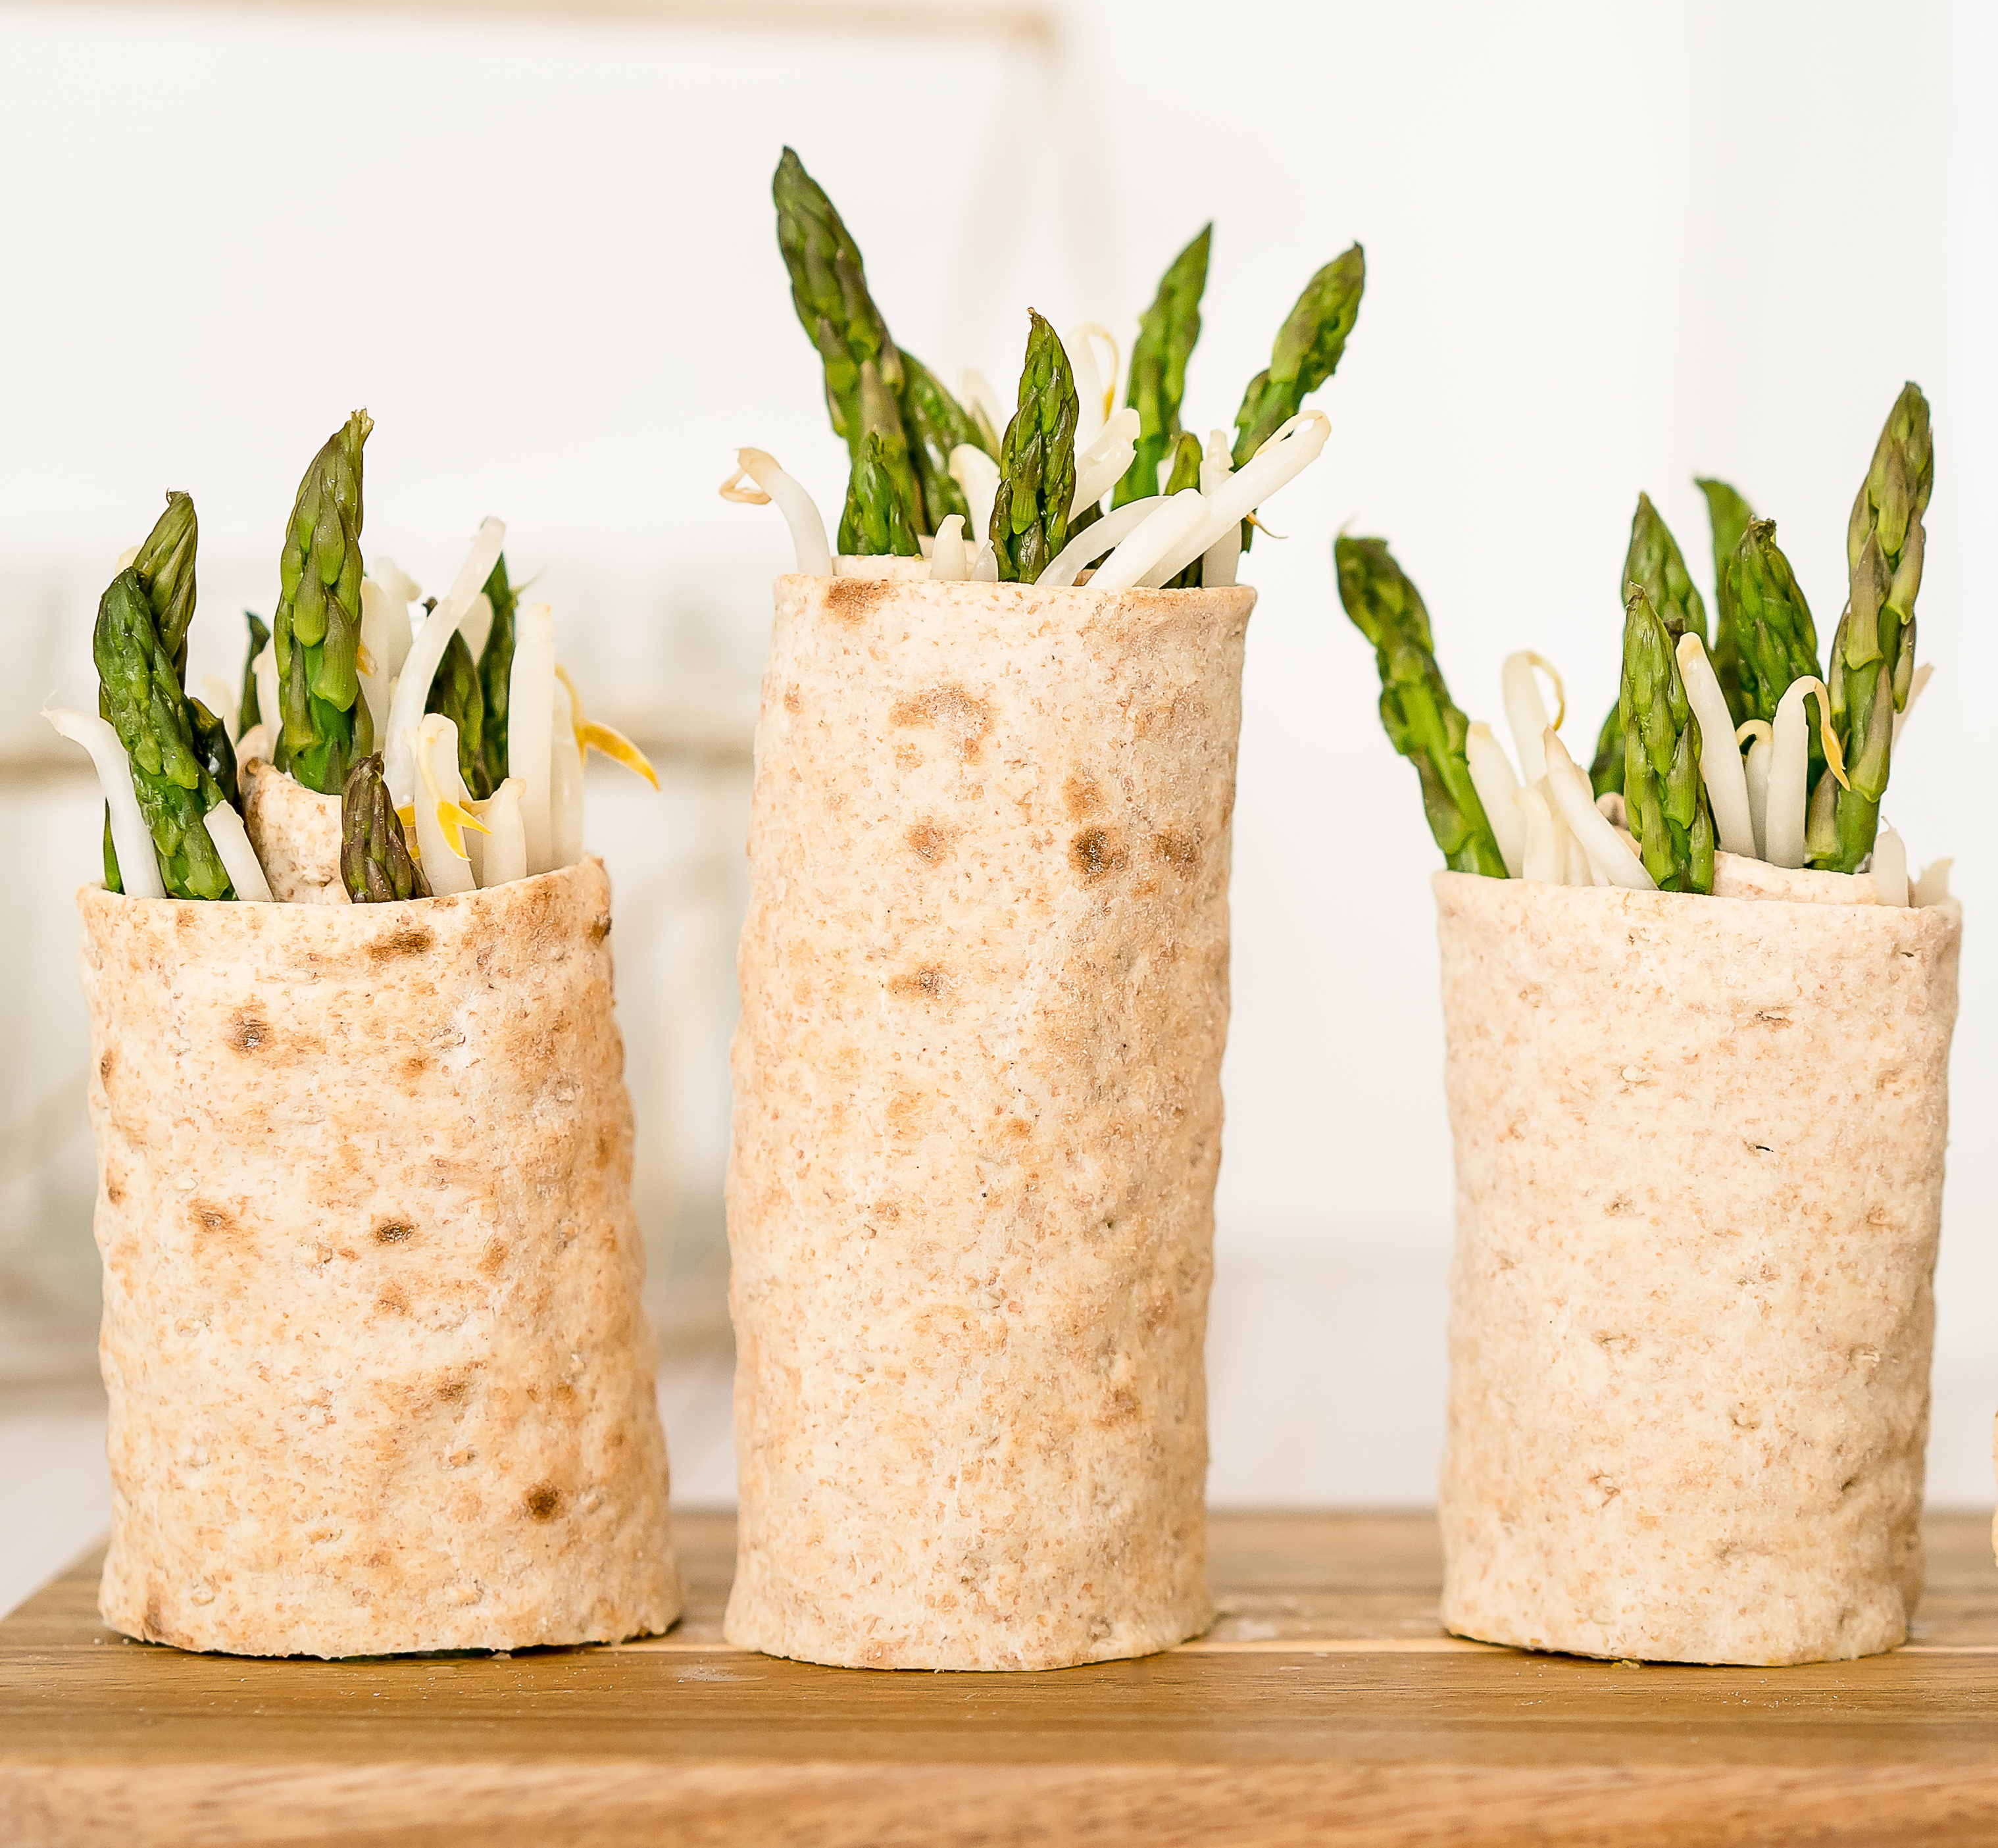 Asparagus and Ricotta Lavash Wraps